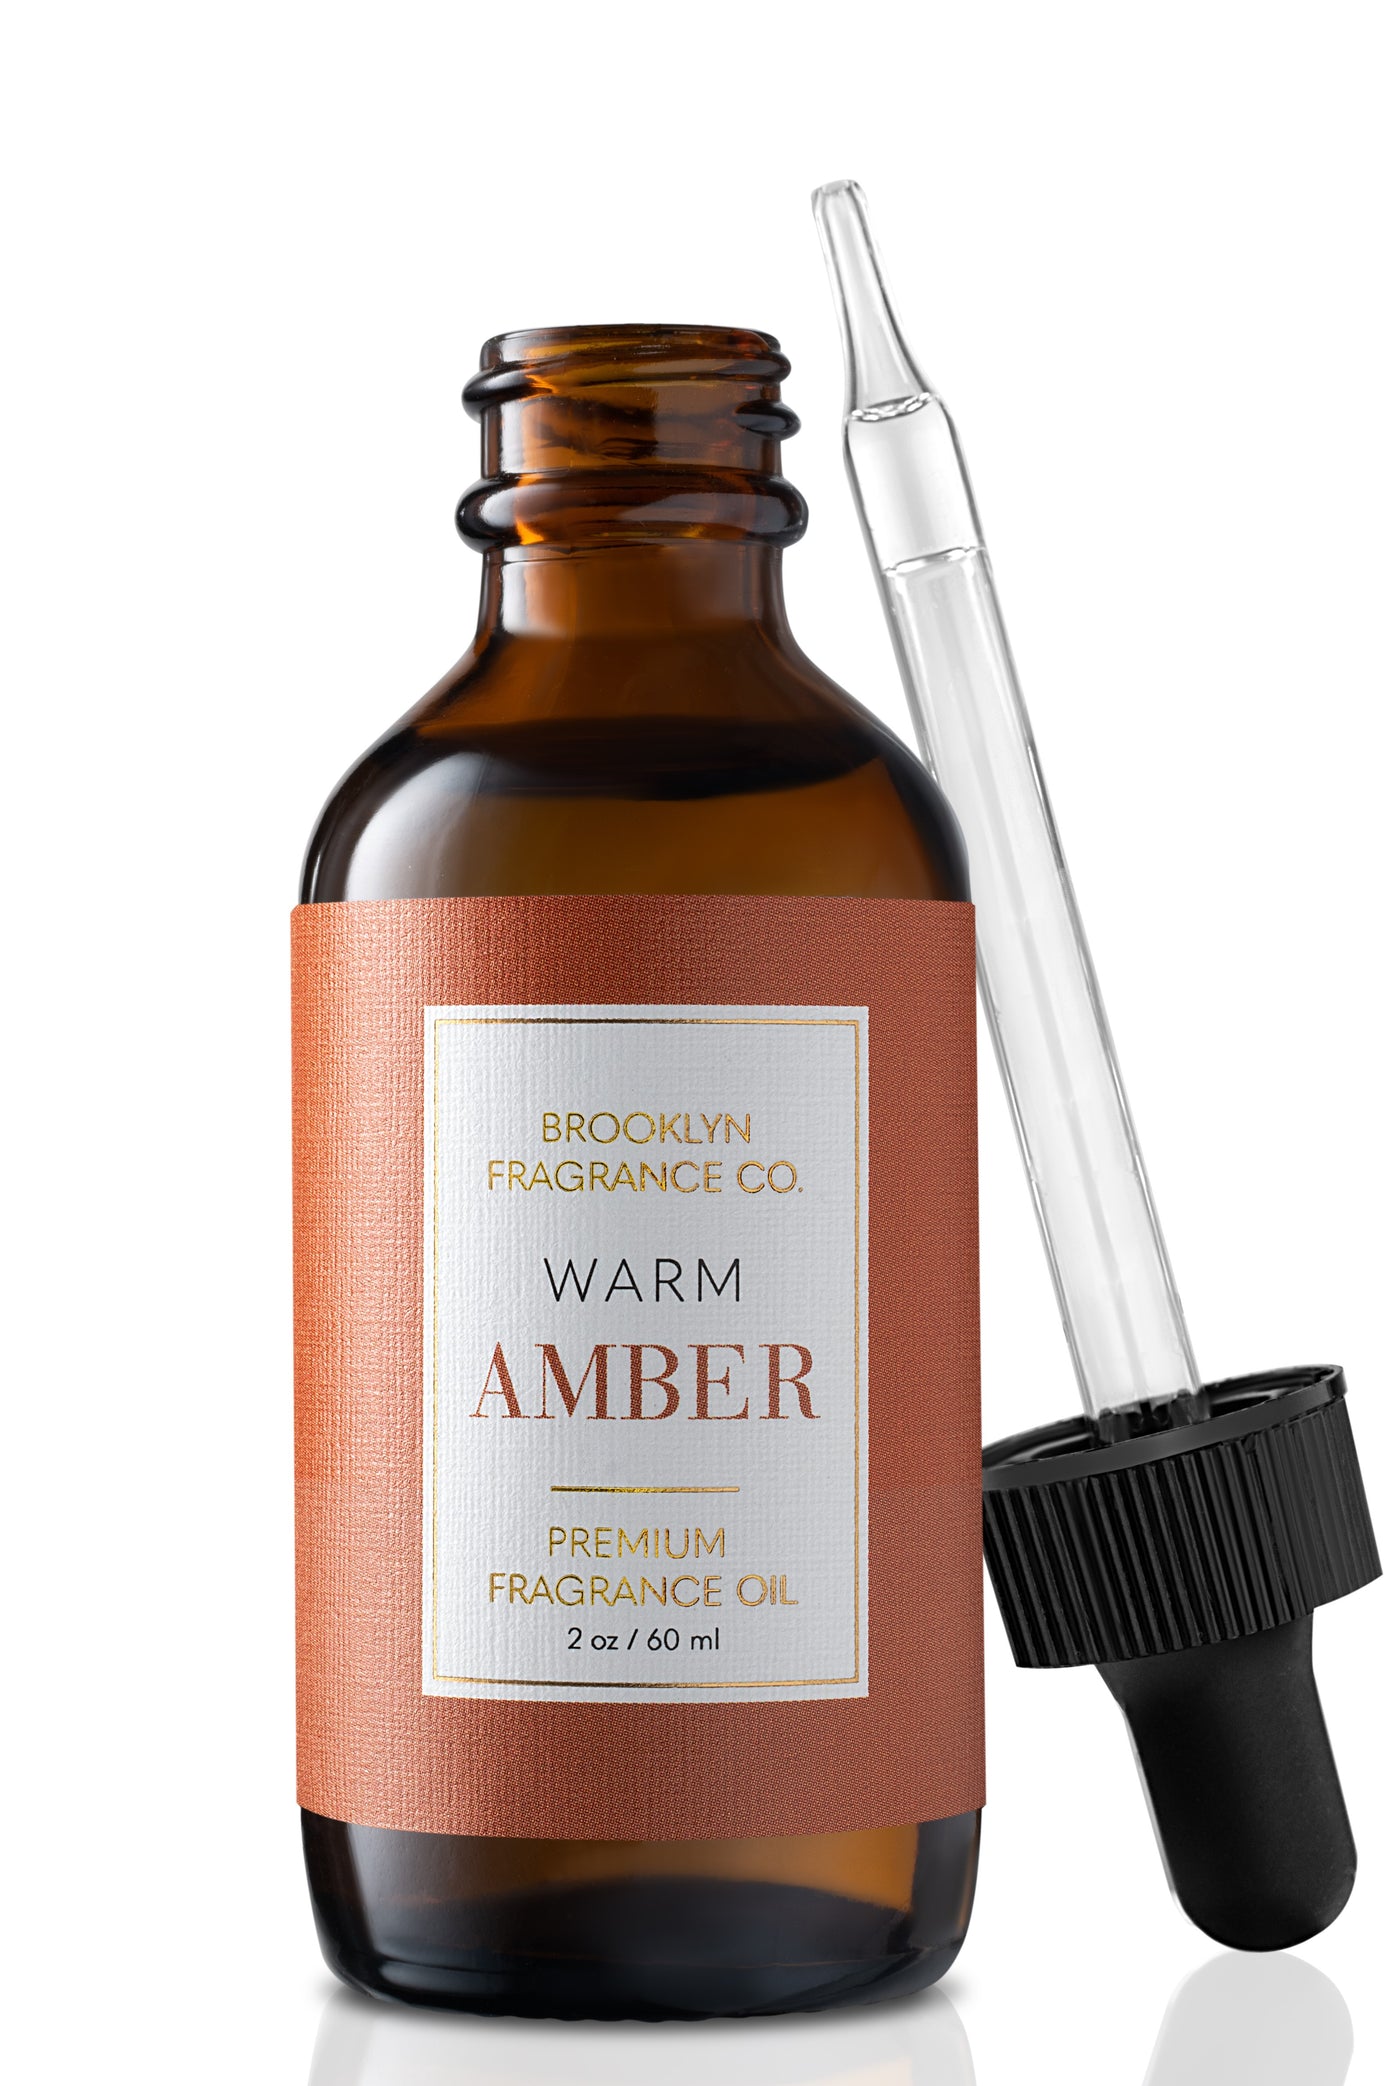 2 oz Premium Fragrance Oil - Warm Amber